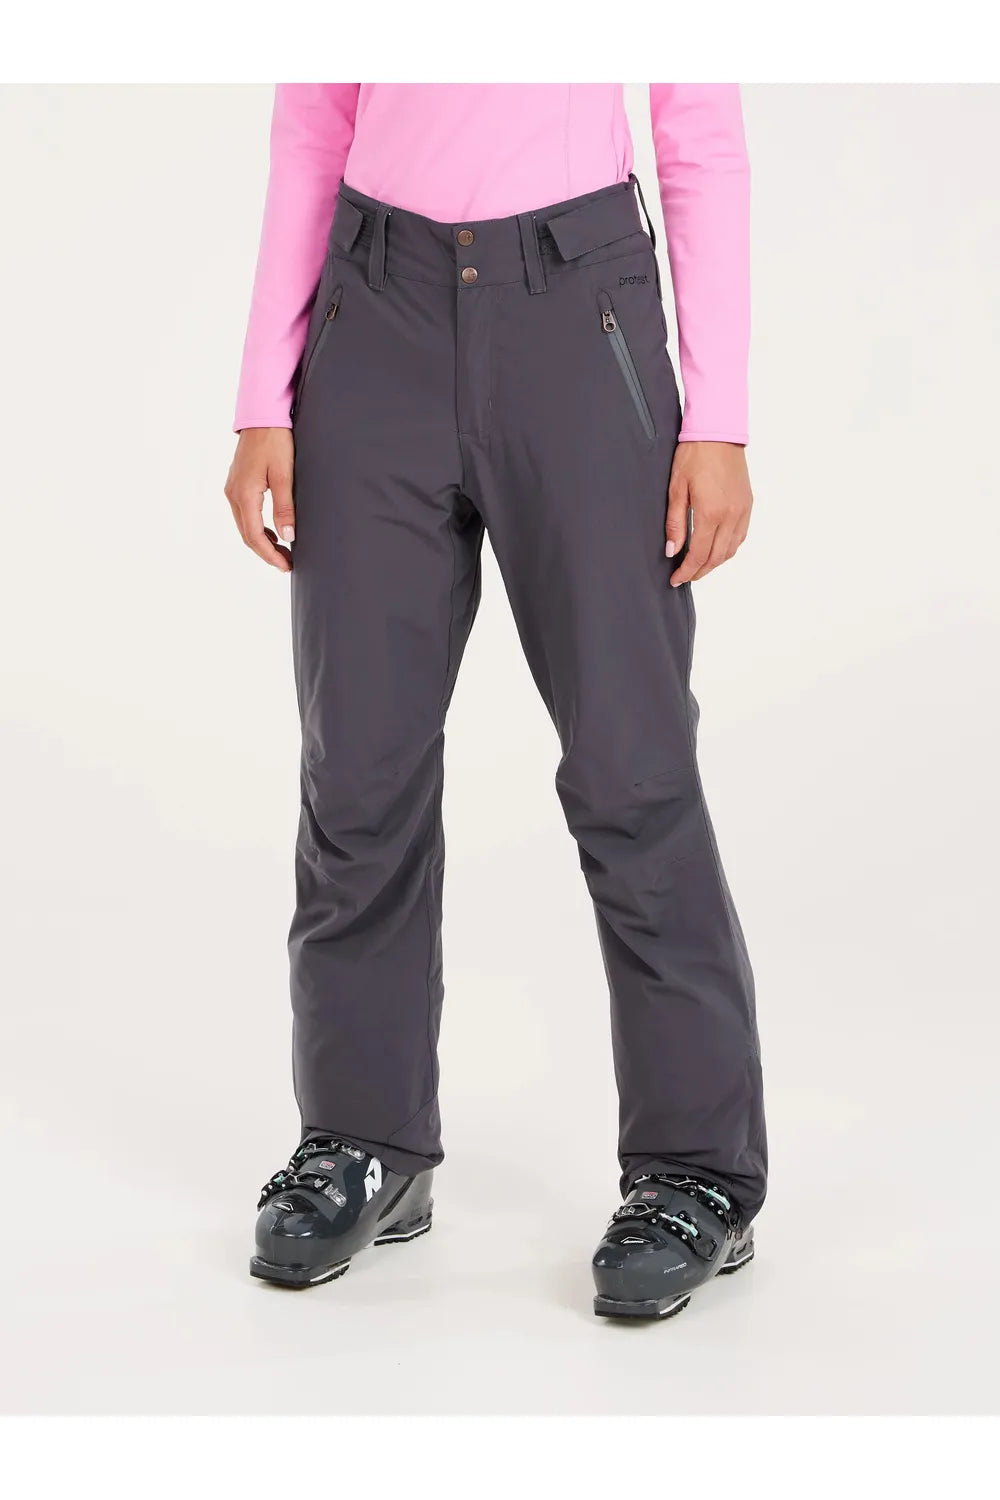 Women's Snowboard Pants & Bibs | Backcountry.com